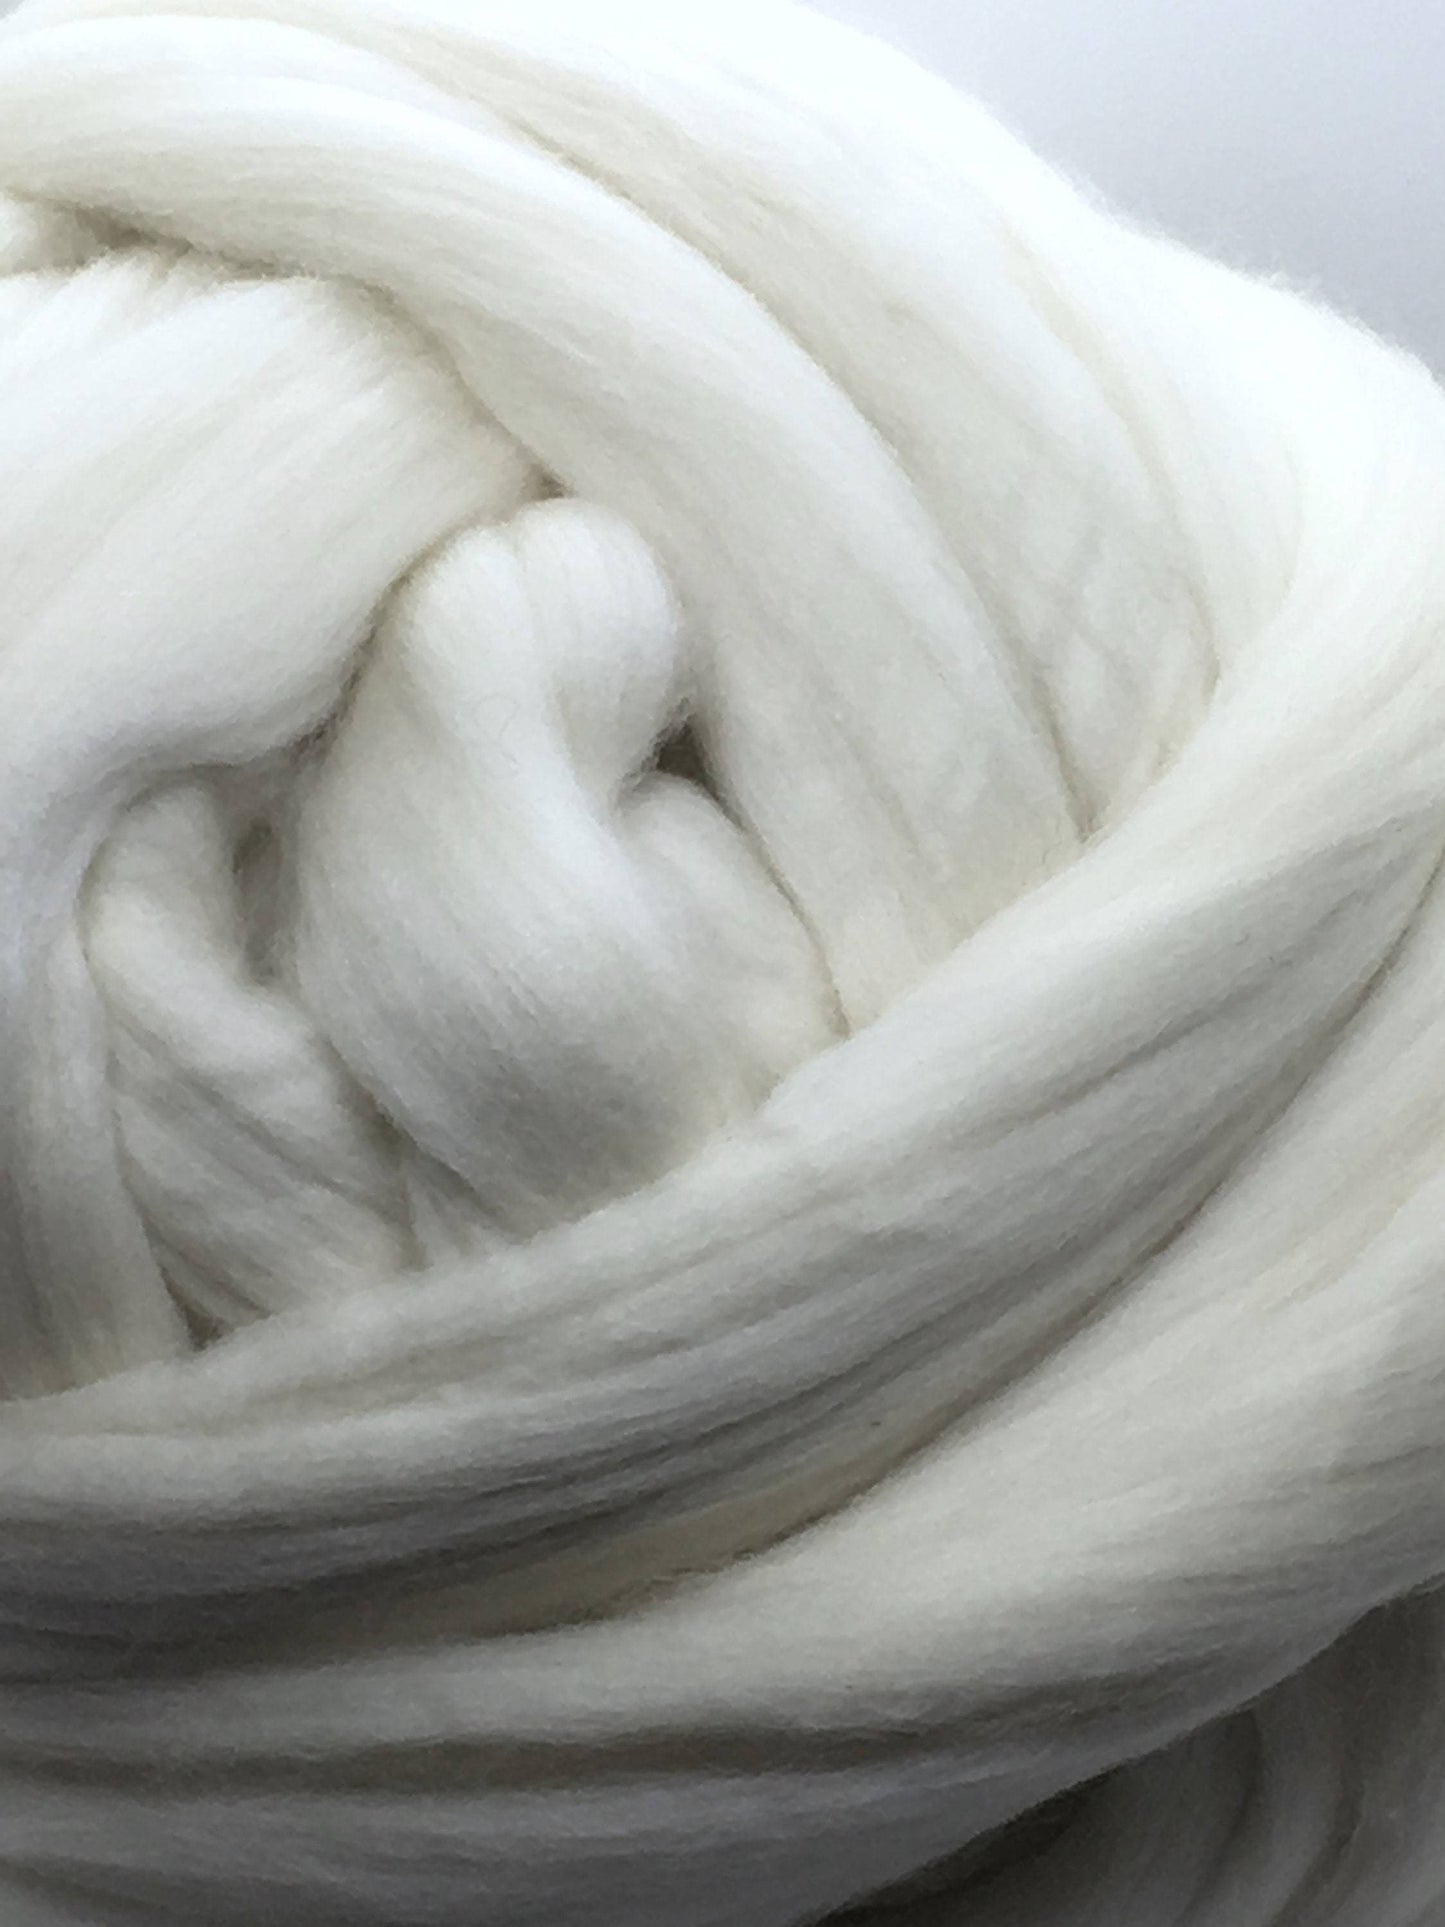 Wool Roving, 1lb (or MORE!), Roving, wool roving, Wool Roving Top, Fiber Spinning, Spin Fiber, Wool For Felting, Wool Felting,Roving Wool